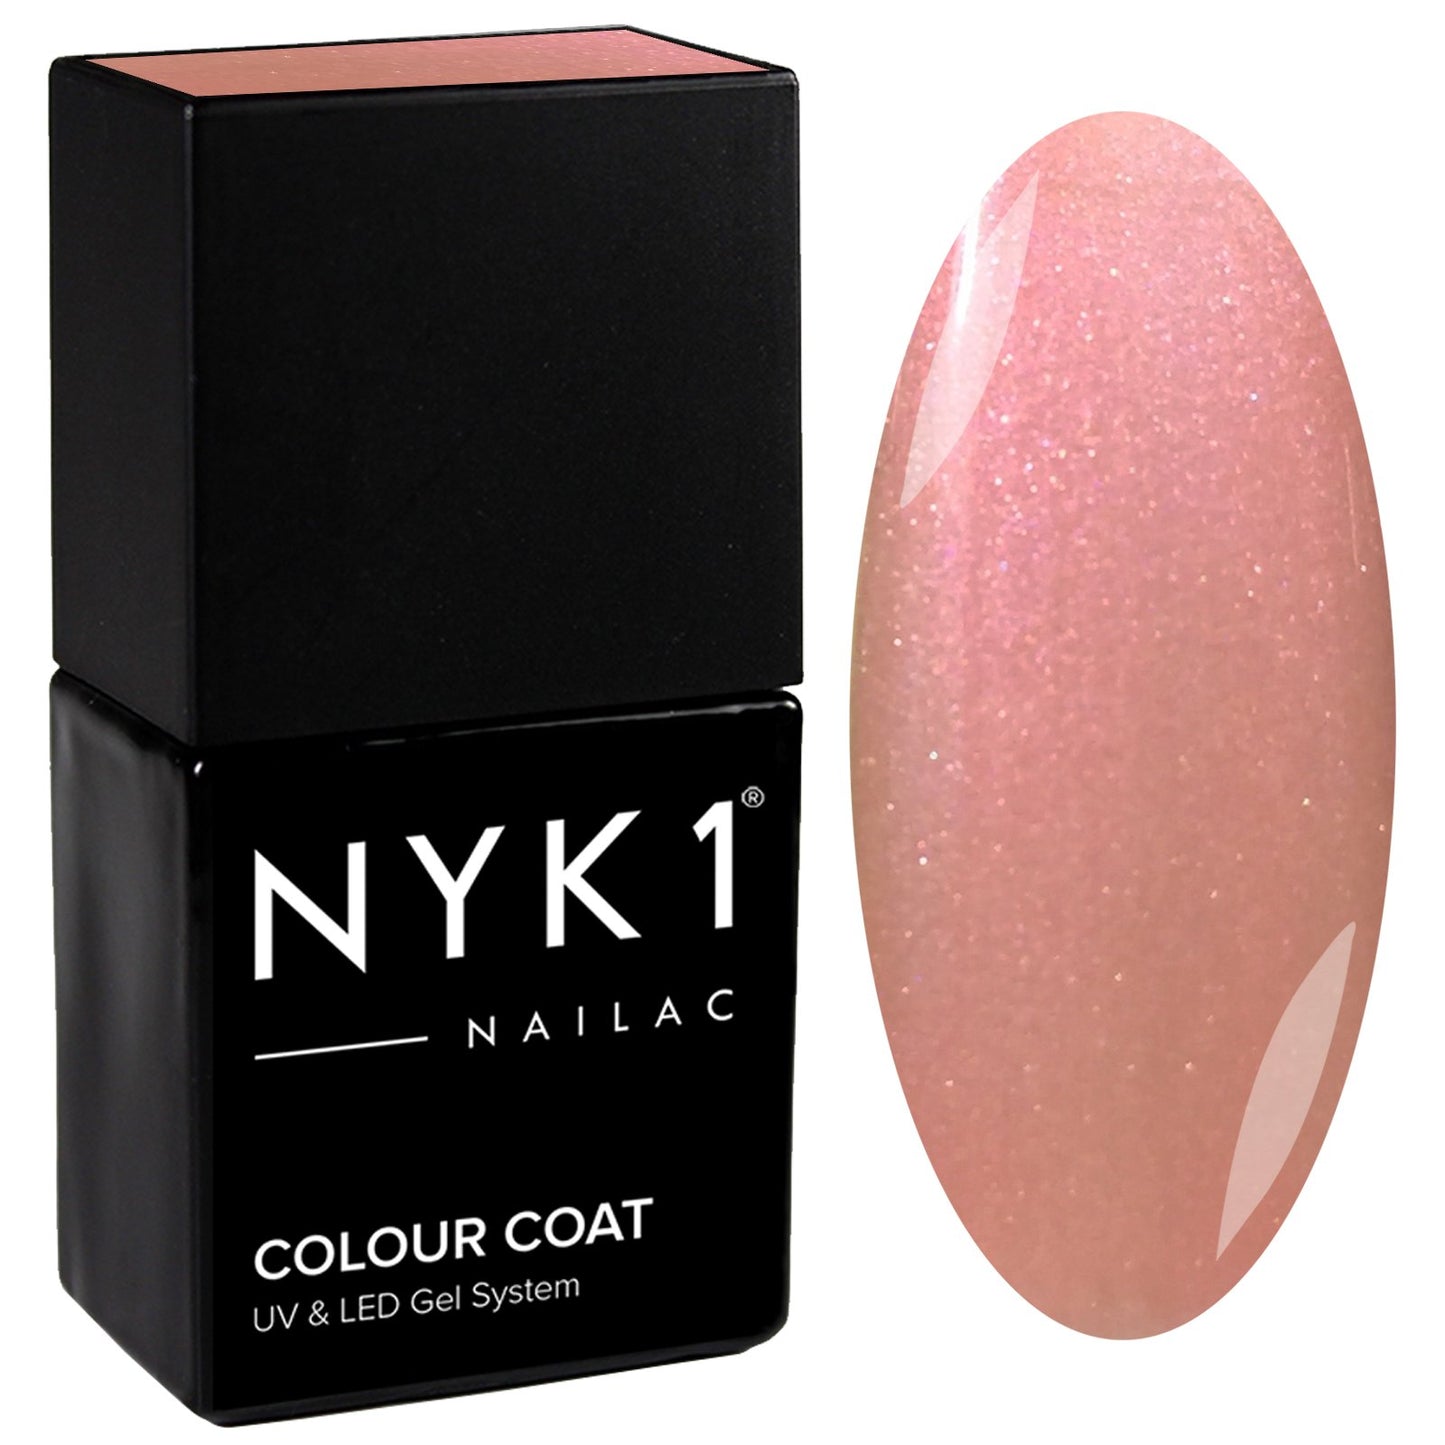 NYK1 Nailac Powder Puff Light Baby Pink Glitter Gel Nail Polish